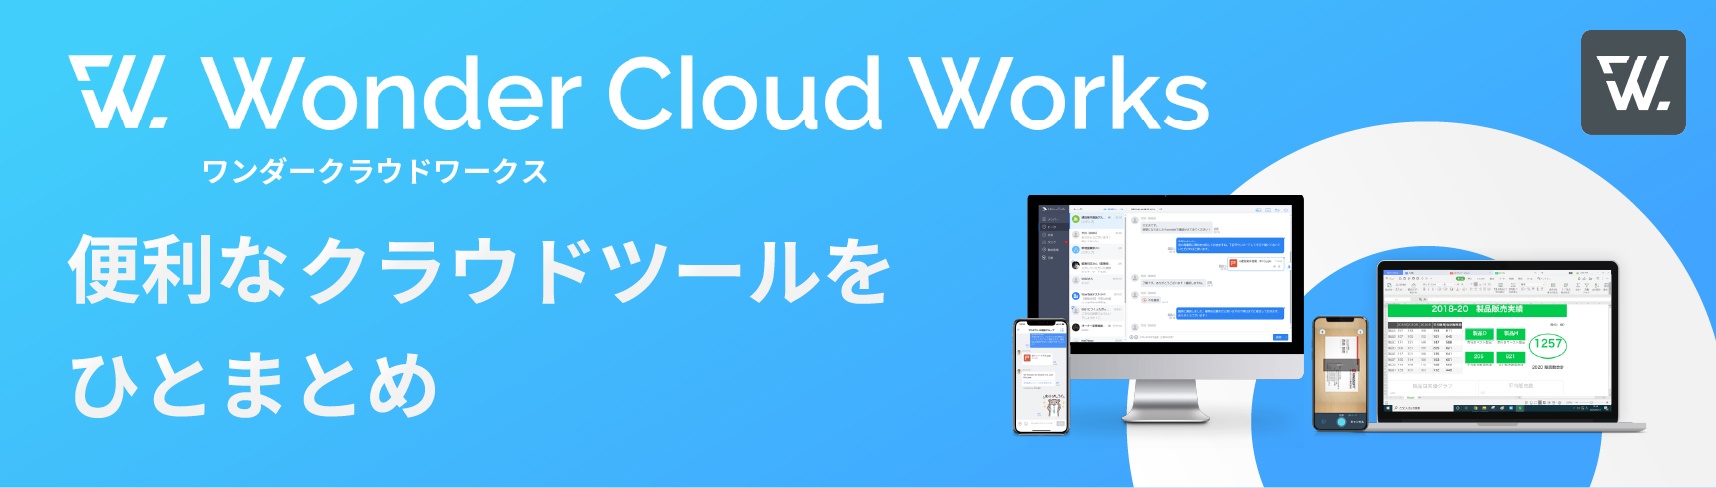 WPS Cloud公式サイト